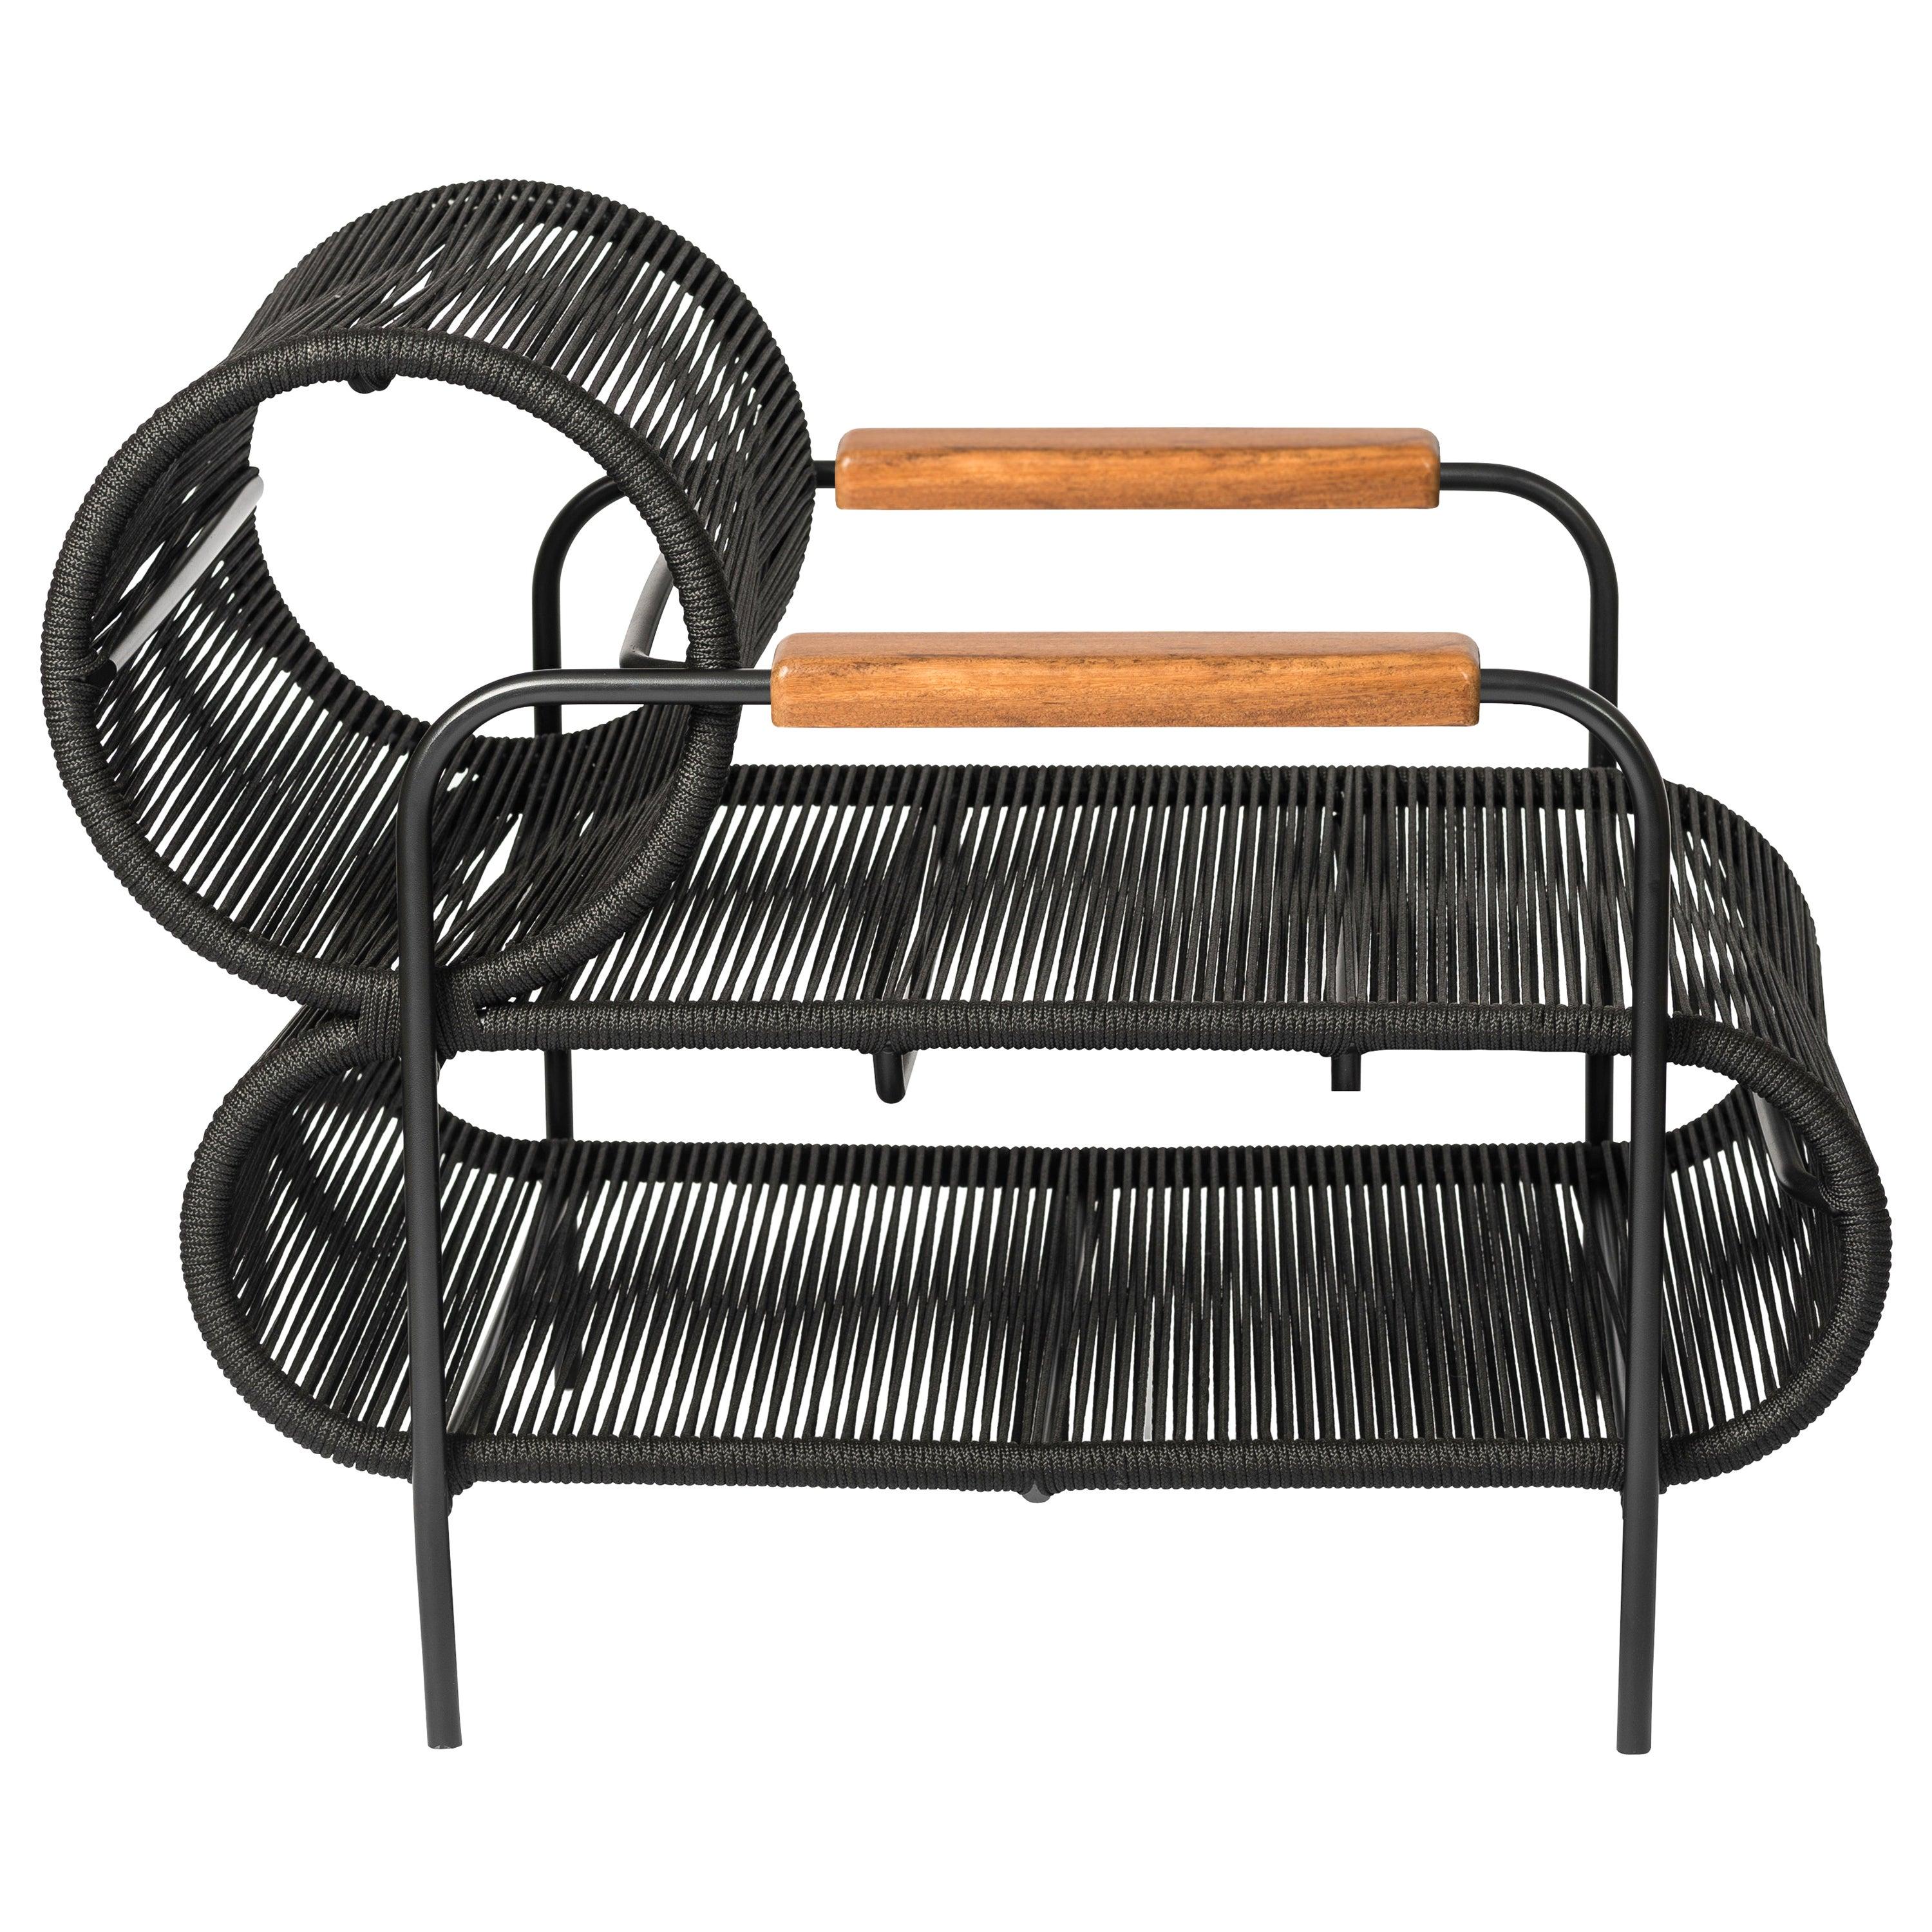 Fauteuil ELO Chaise longue In/Outdoor en métal, corde et Wood bras par Filipe Ramos